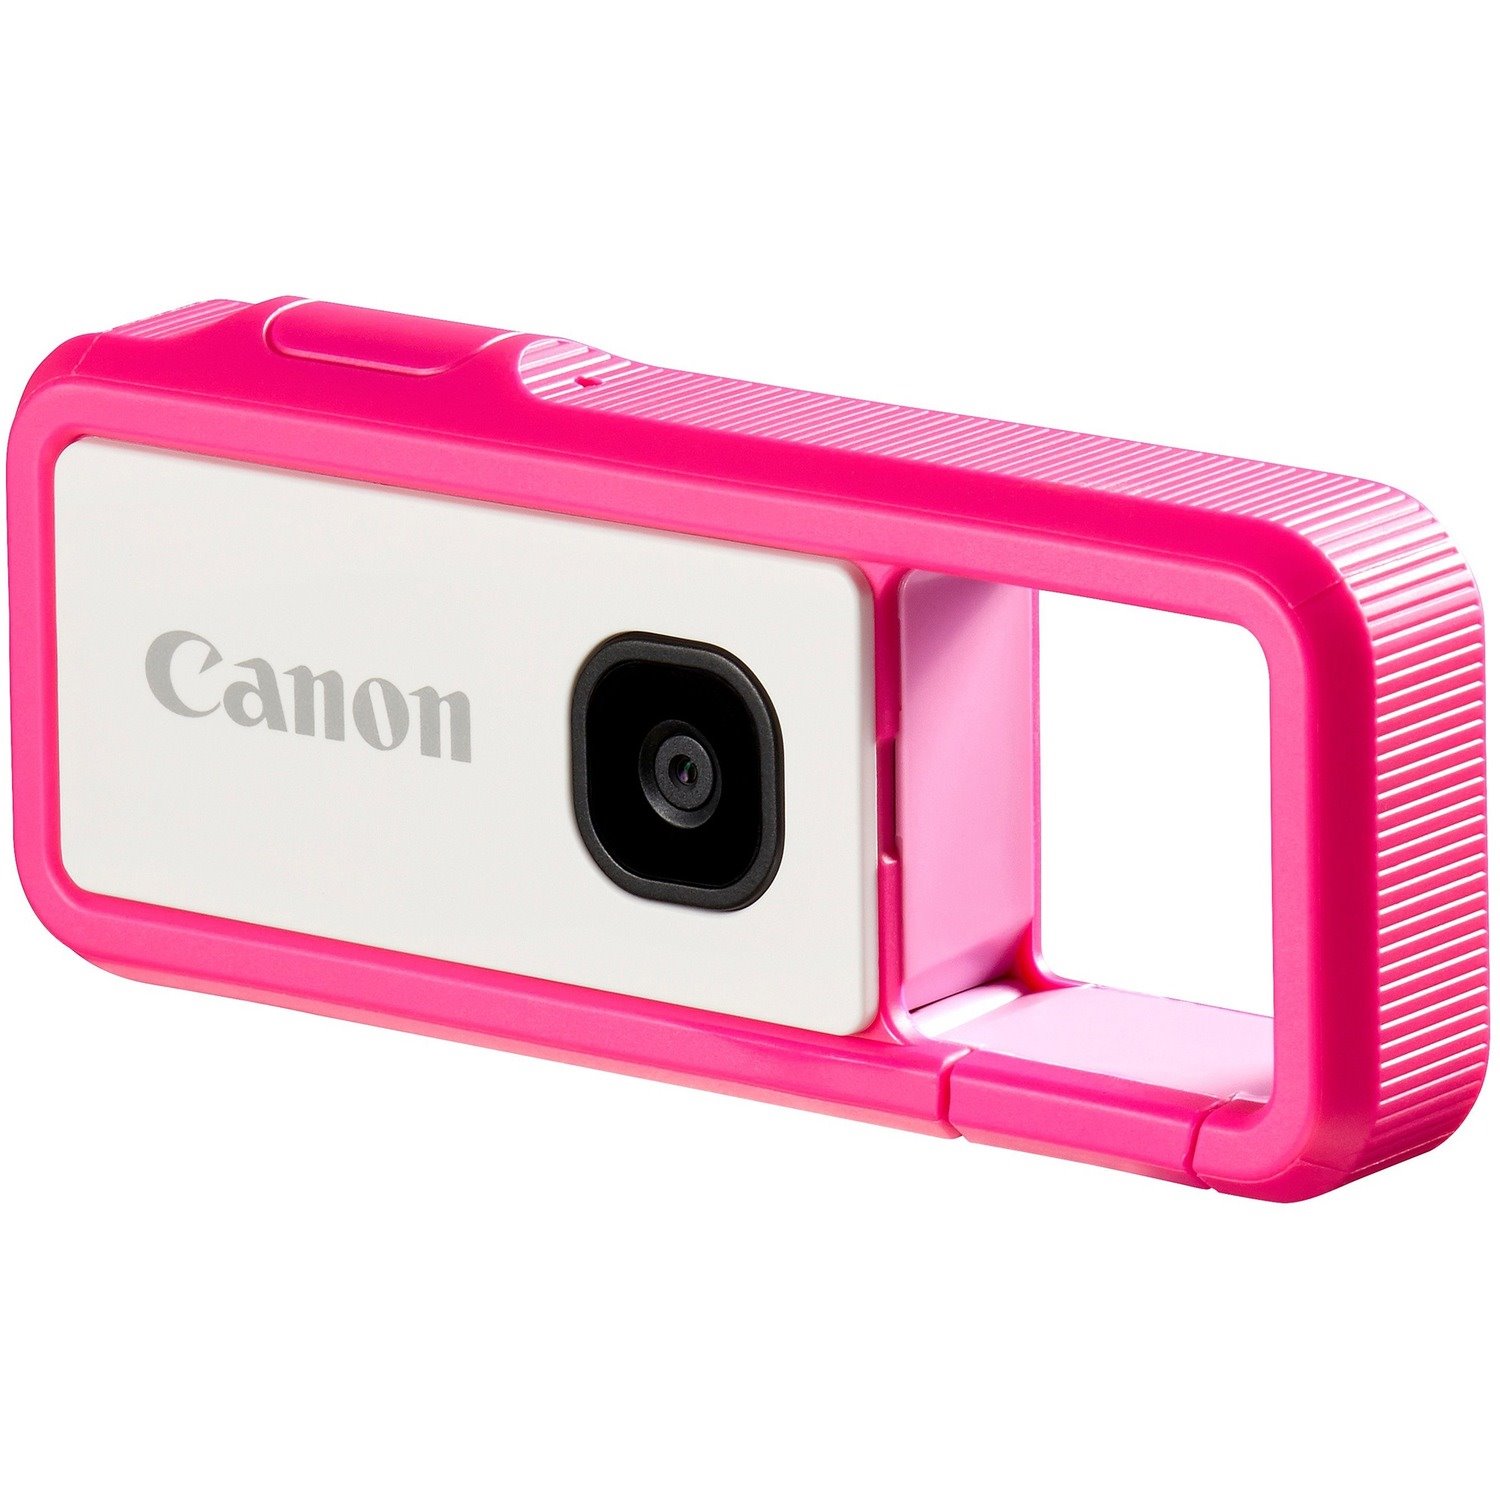 Canon 13 Megapixel Compact Camera - Dragonfruit